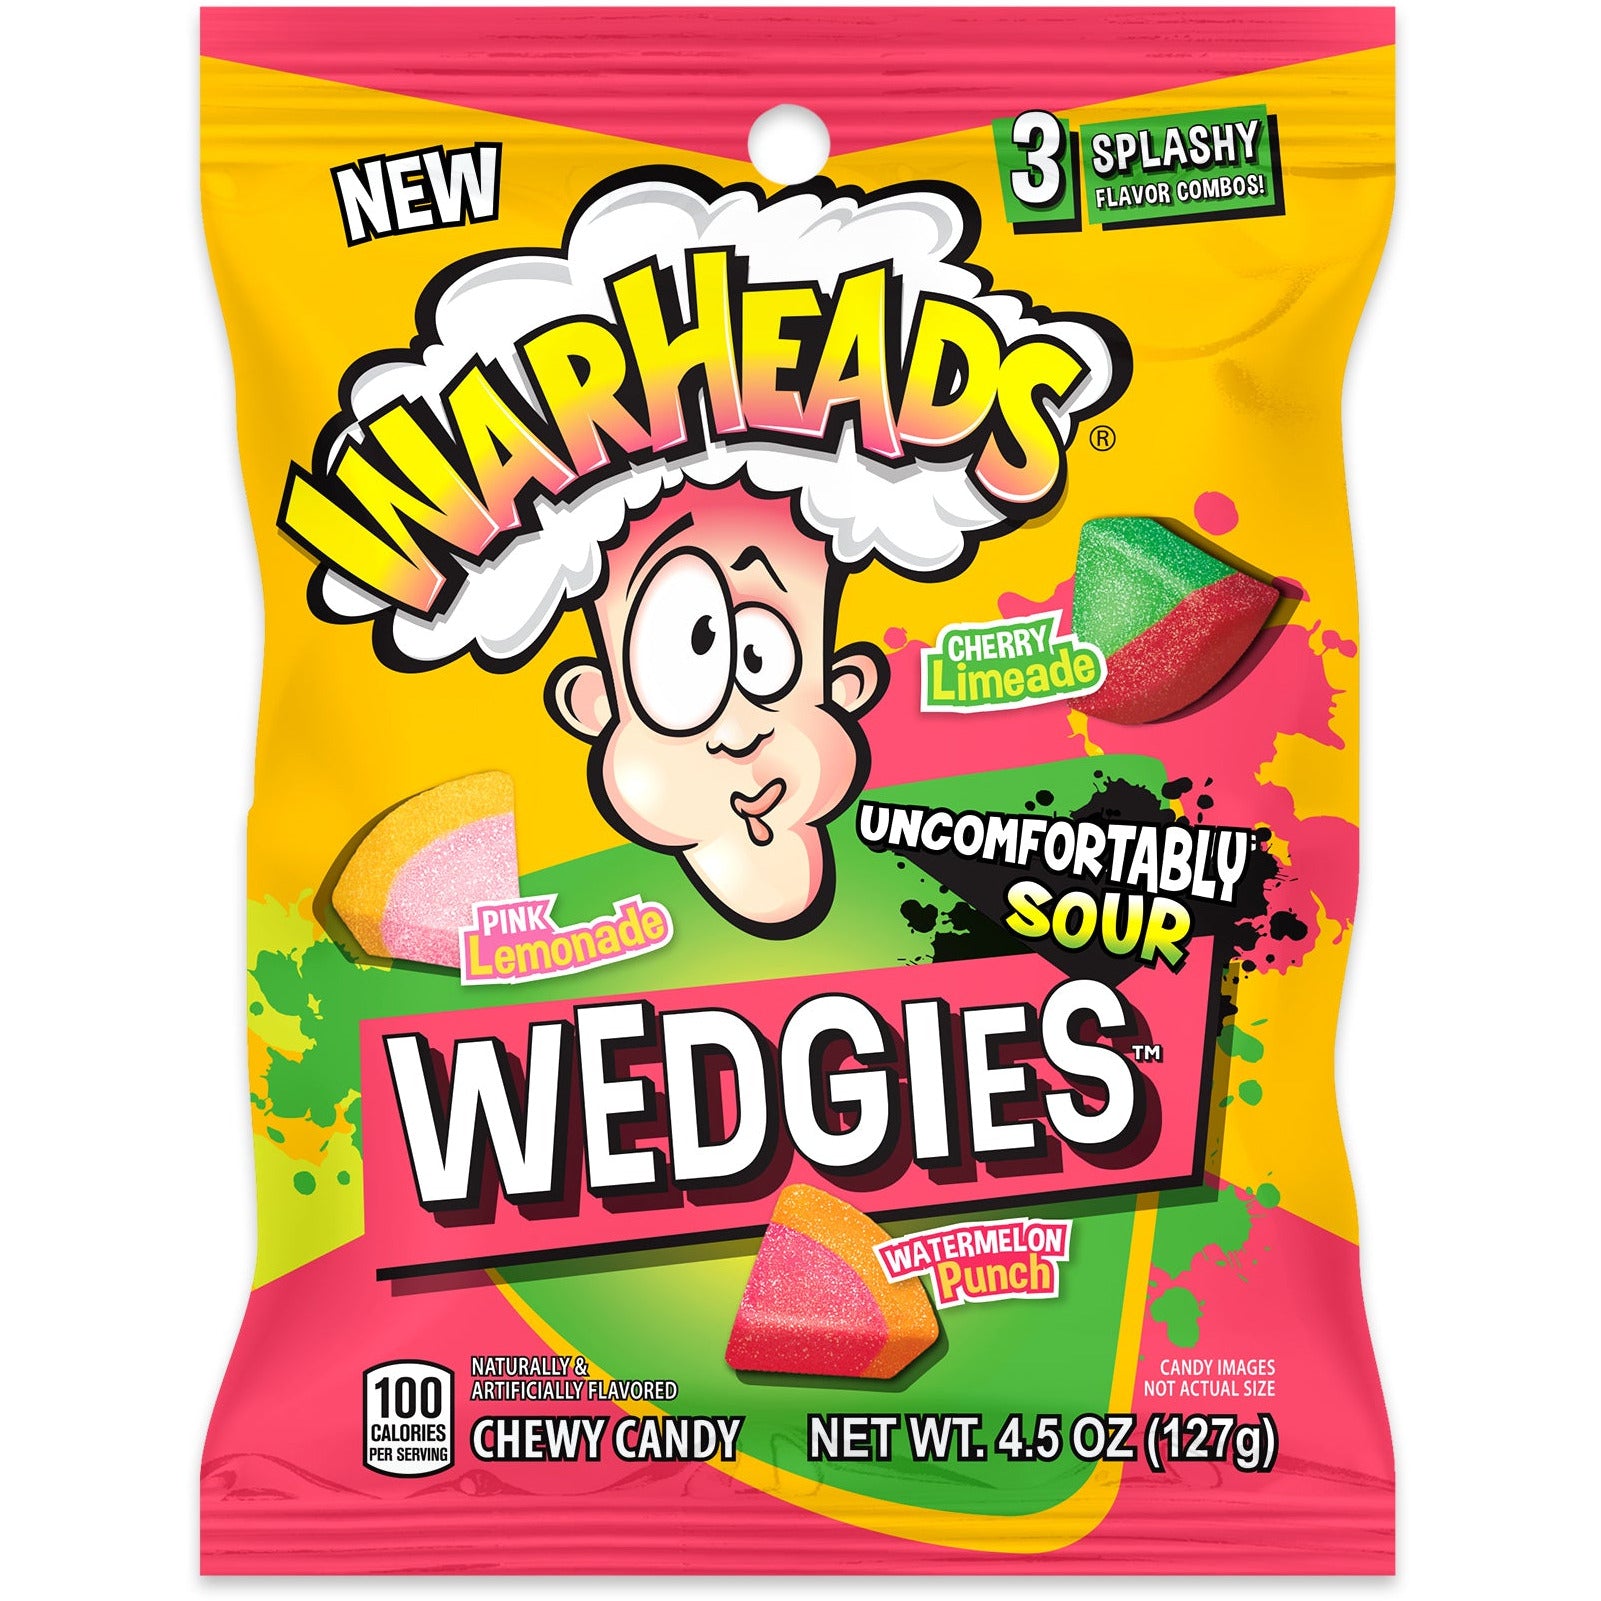 Kool Aid Fruity Chews 2.5oz bag or 12ct box — Sweeties Candy of